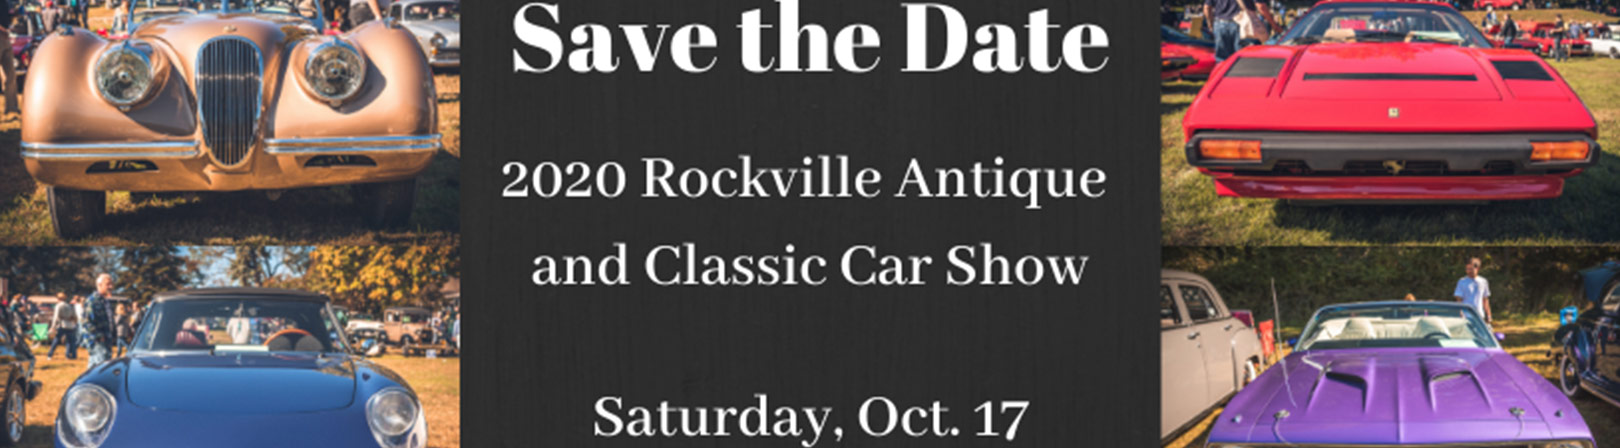 Rockville Antique and Classic Car Show